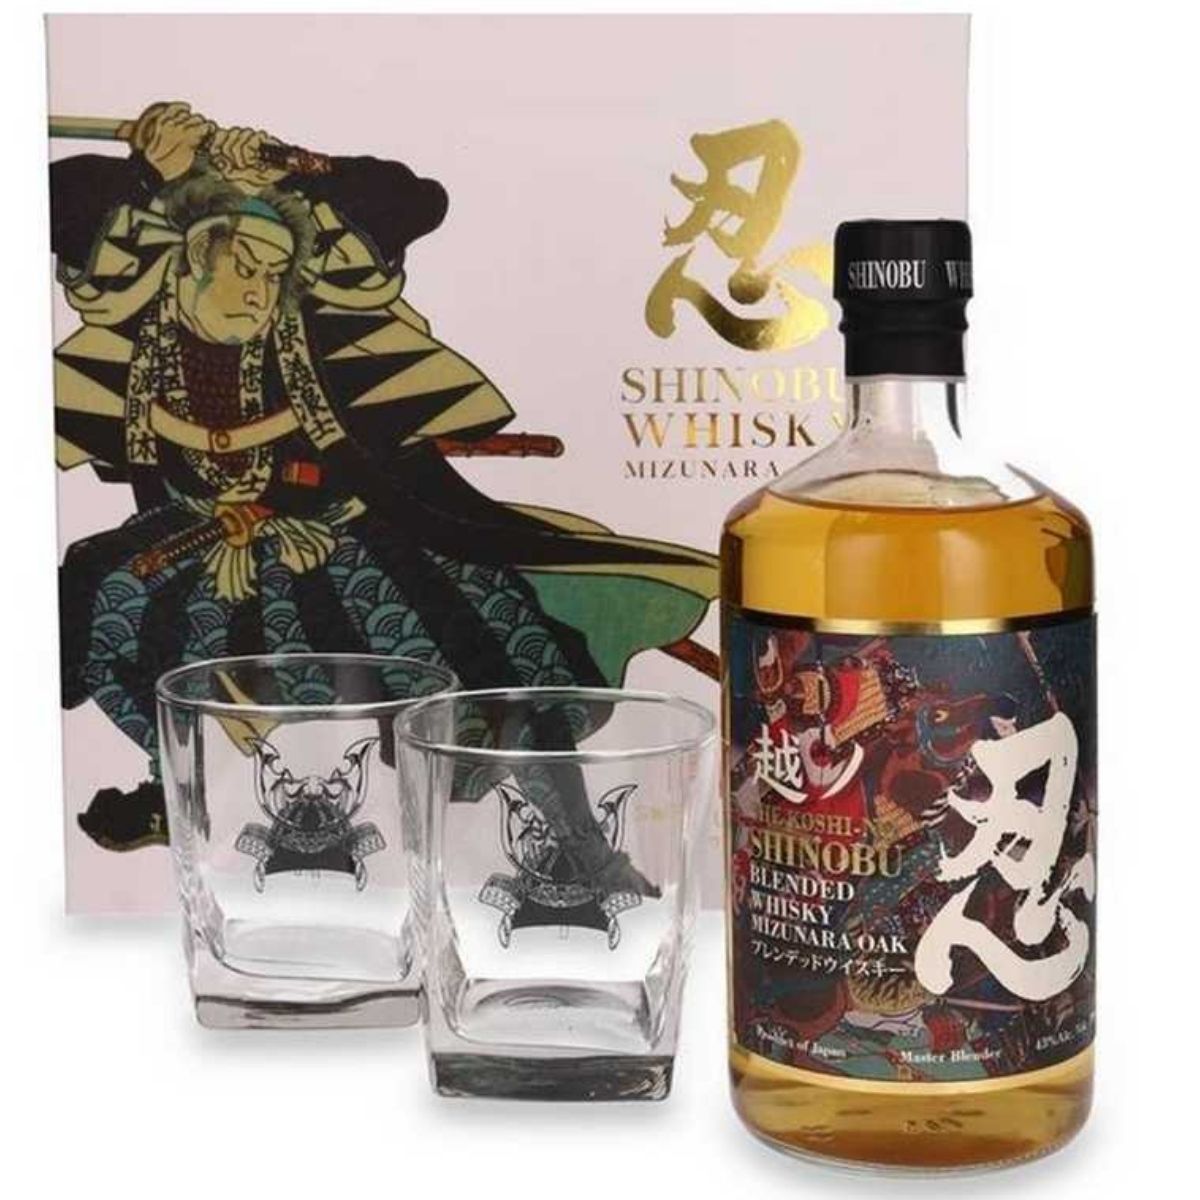 Shinobu Whisky Mizunara : l'épopée du samouraï en verre